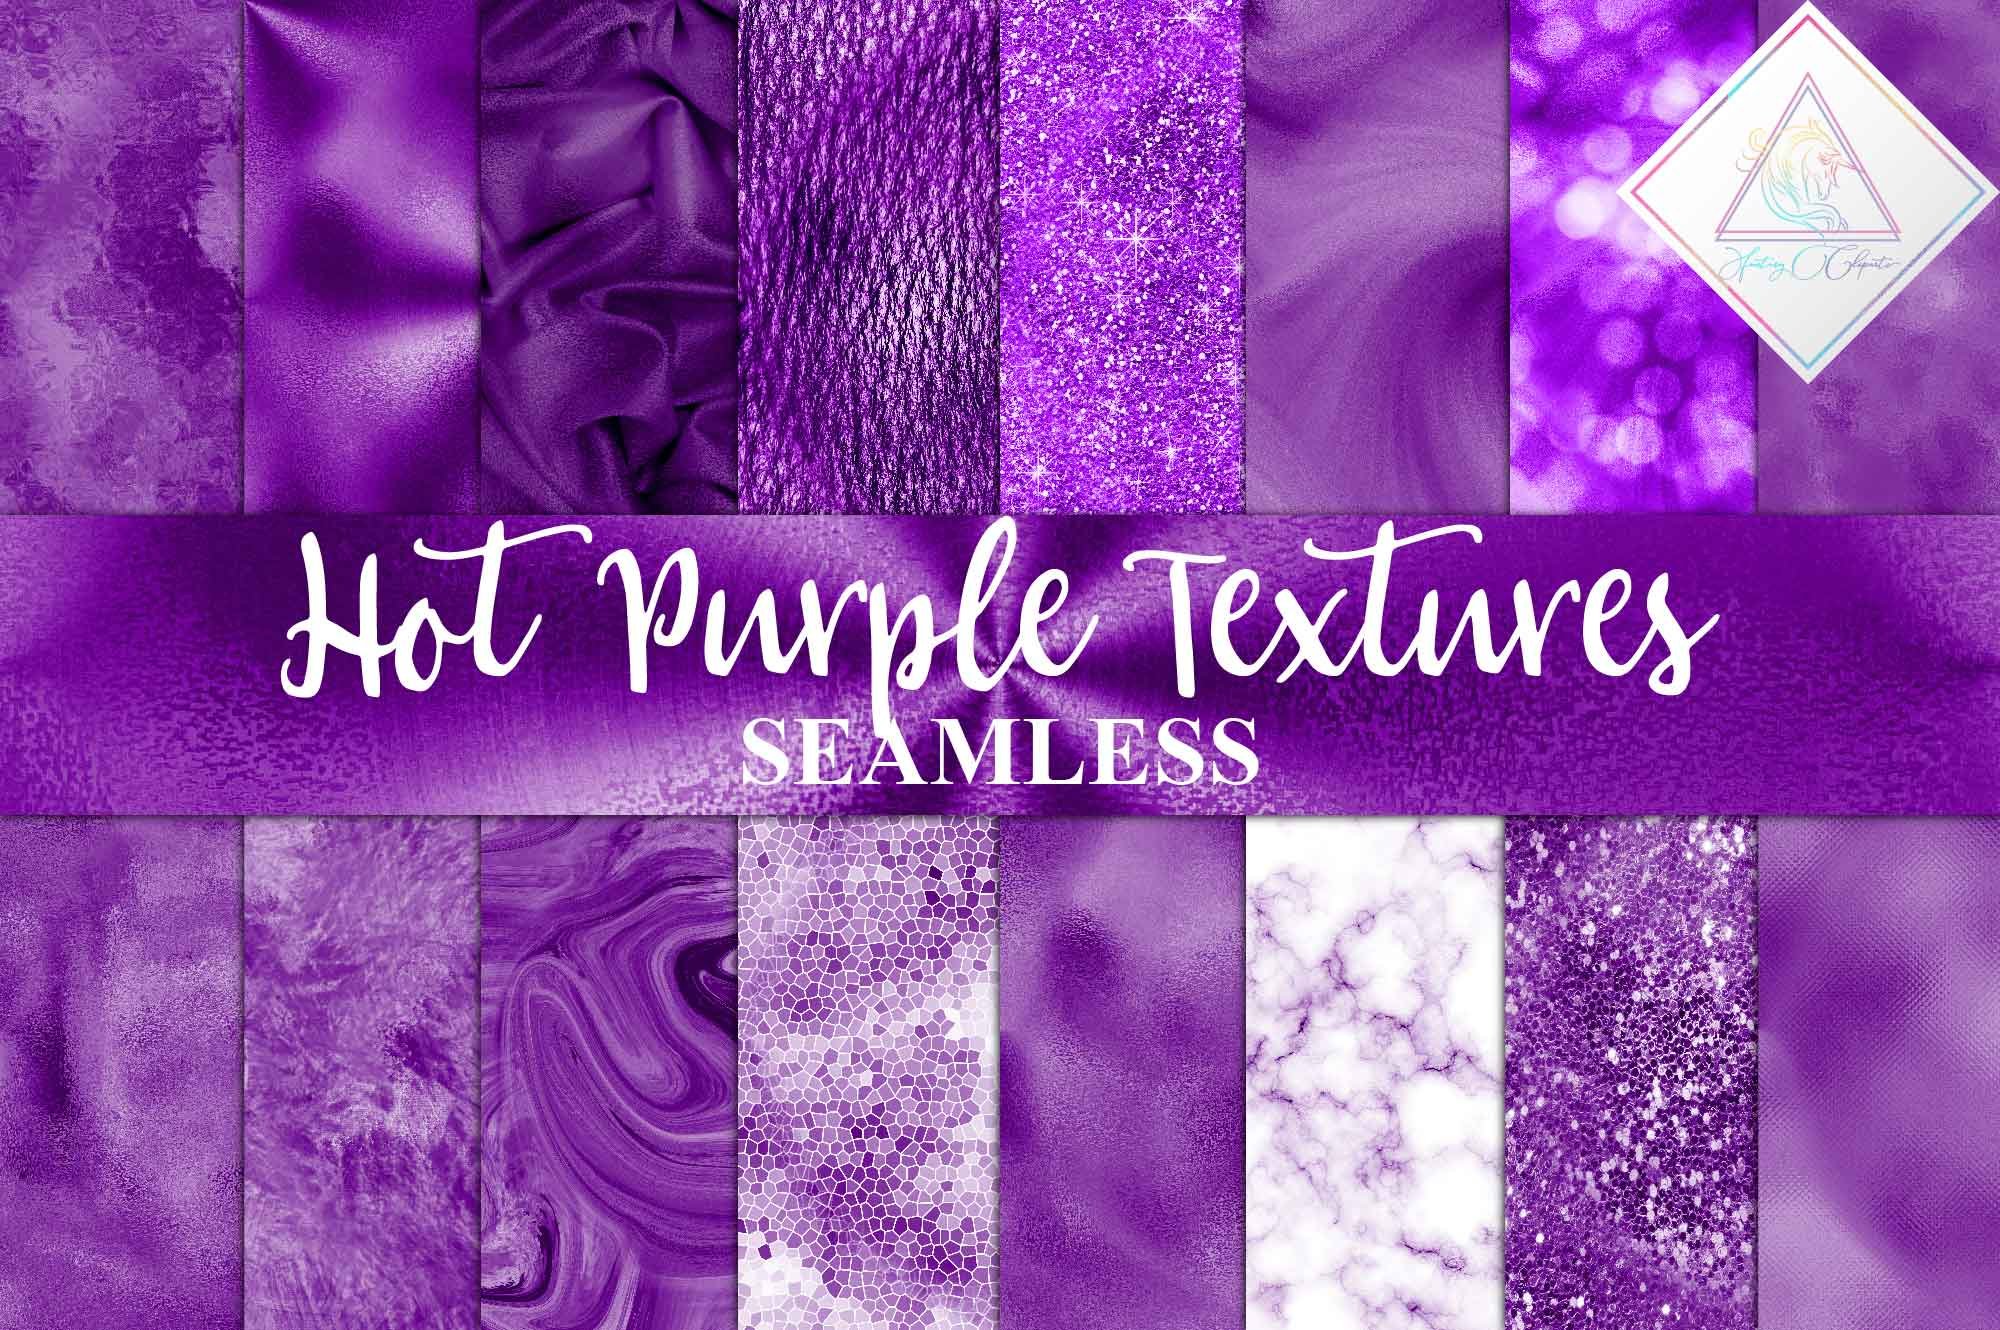 Hot Purple Textures Digital Paper cover image.